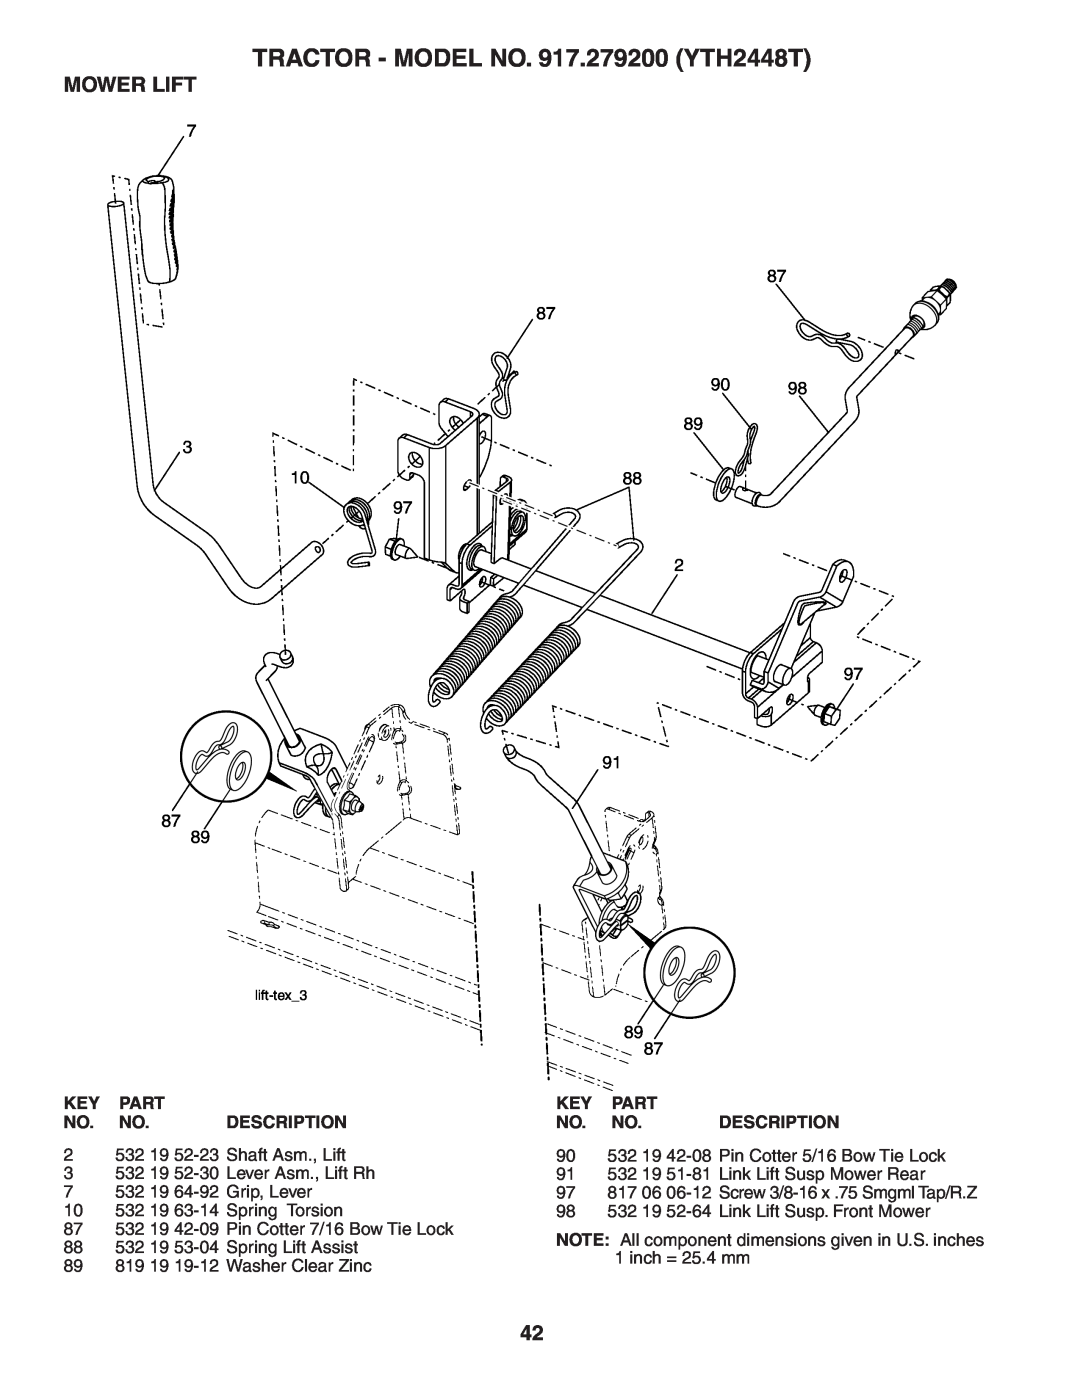 Husqvarna owner manual Mower Lift, TRACTOR - MODEL NO. 917.279200 YTH2448T, lift-tex3 